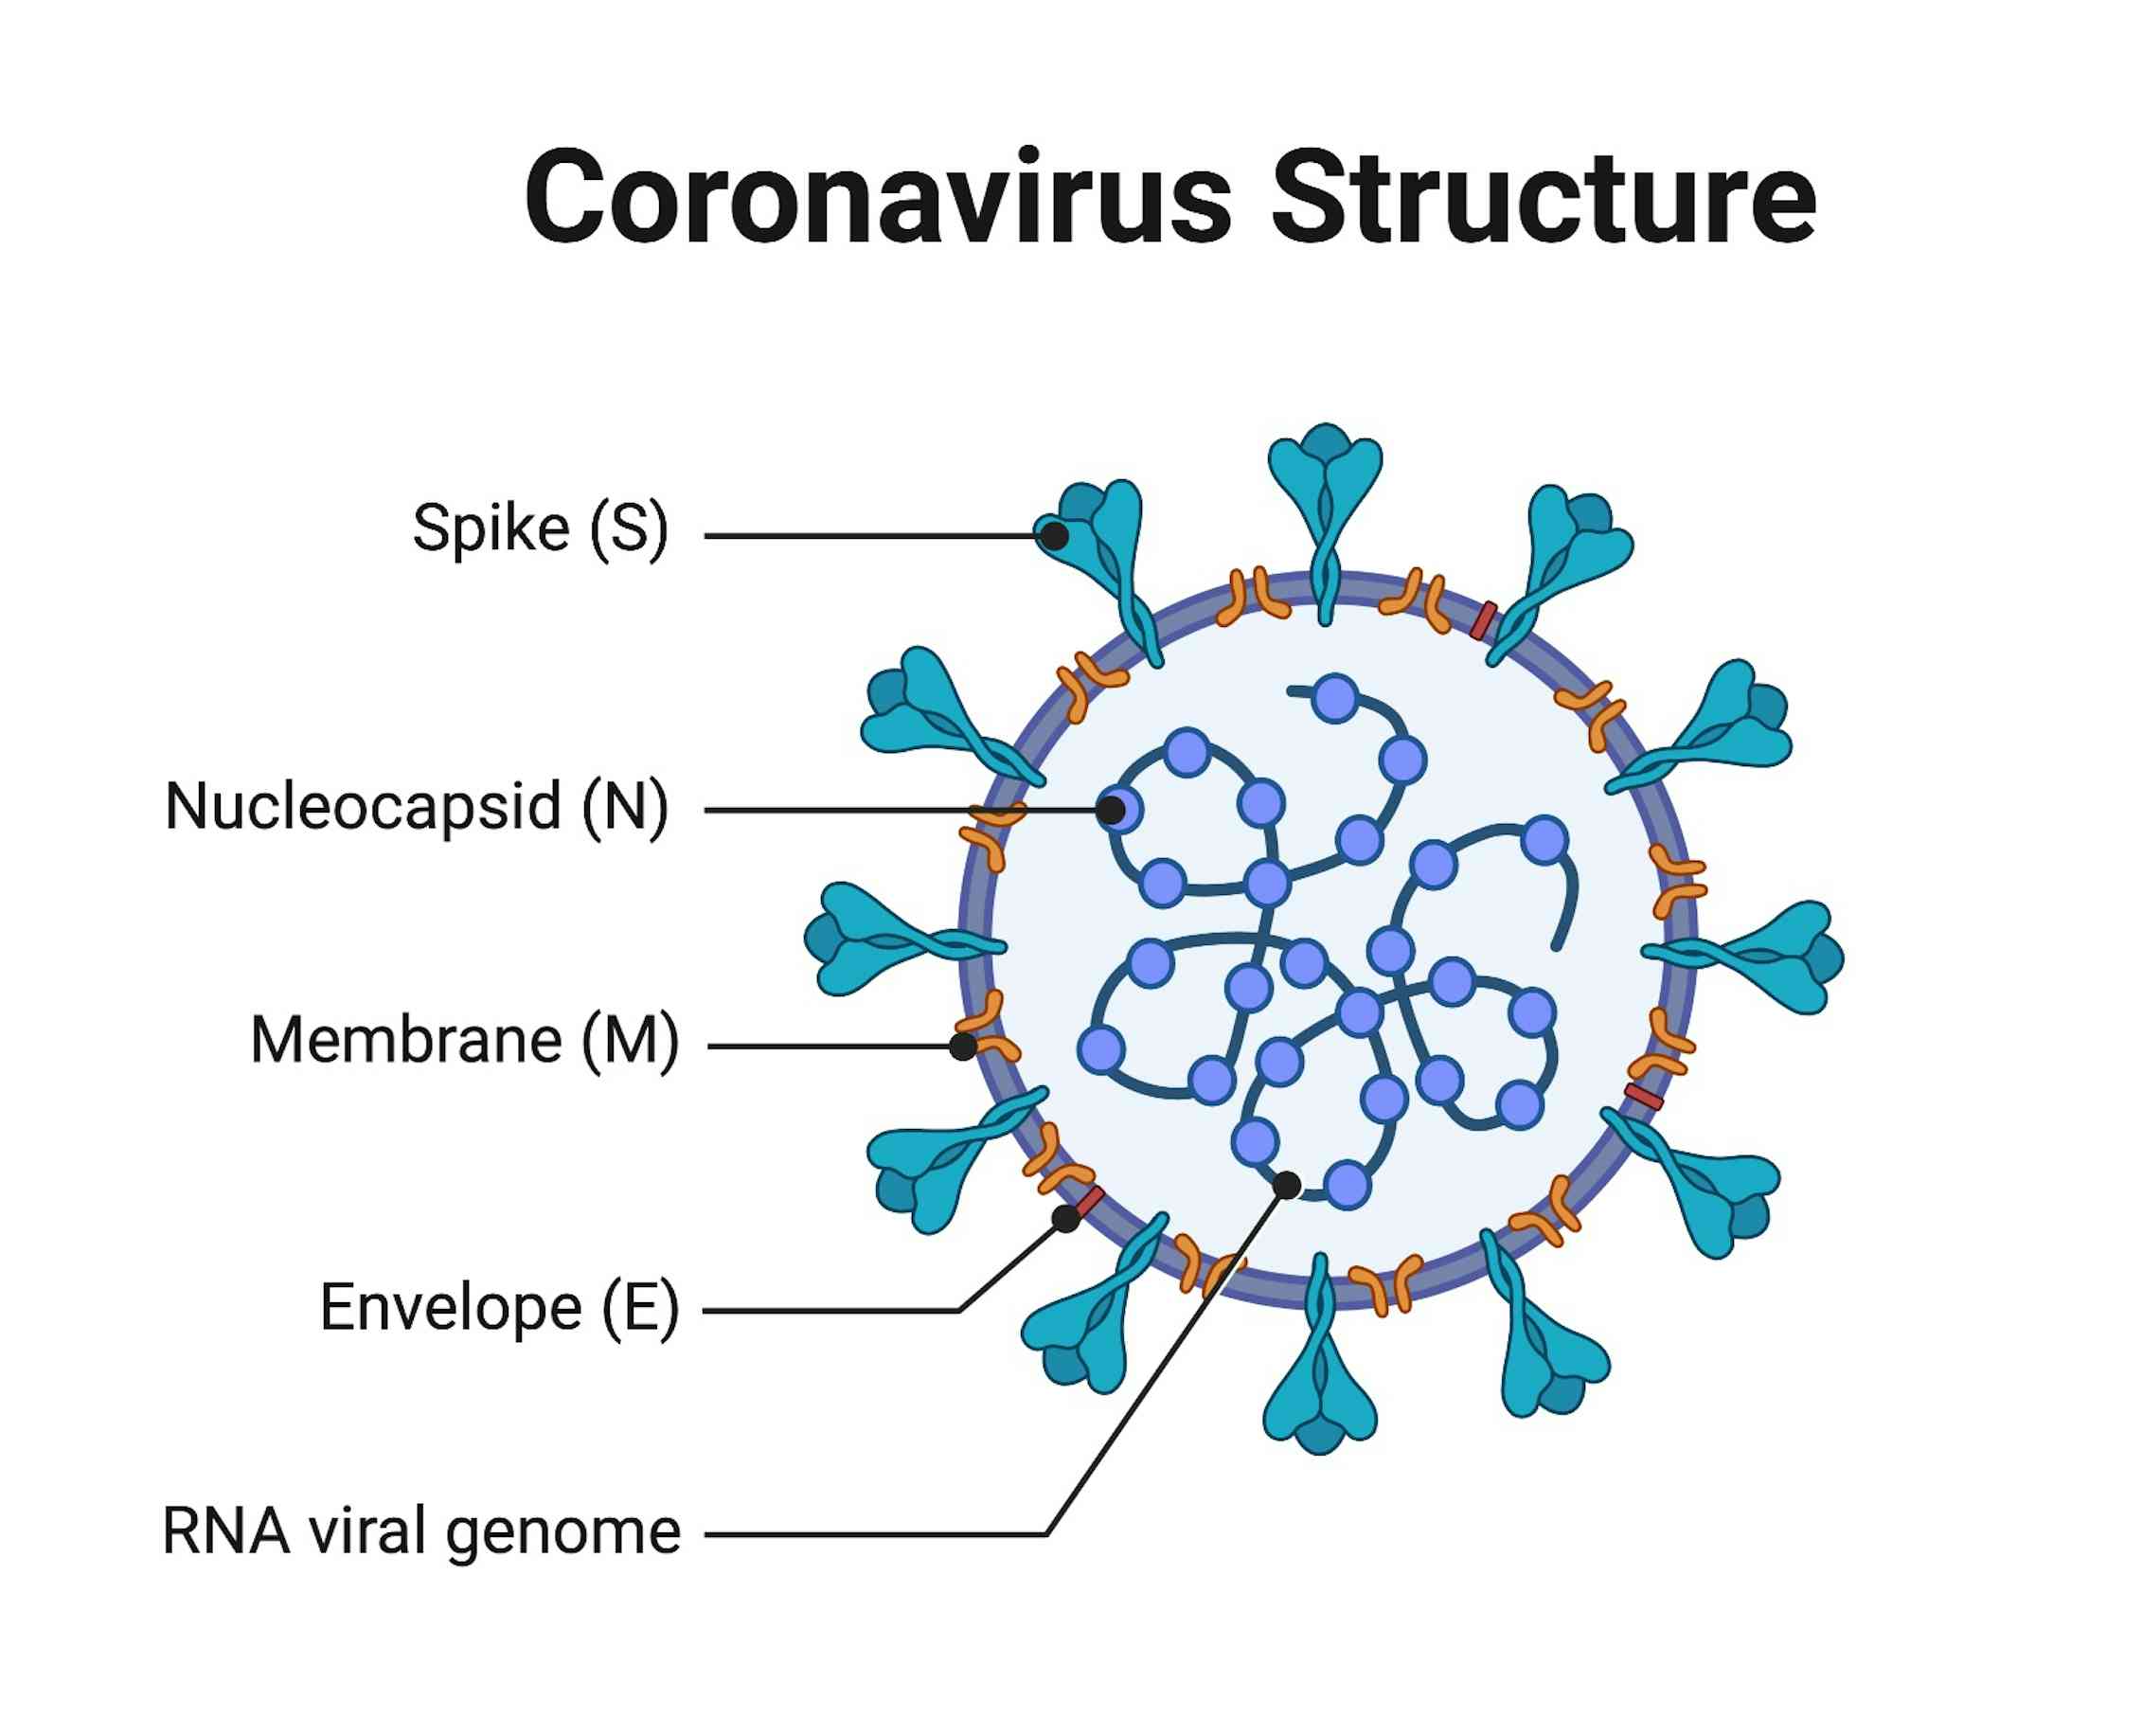 Virus making. Структура s-белок коронавируса Covid-19. Строение коронавируса Covid-19. Структура вируса Covid-19. BIORENDER.